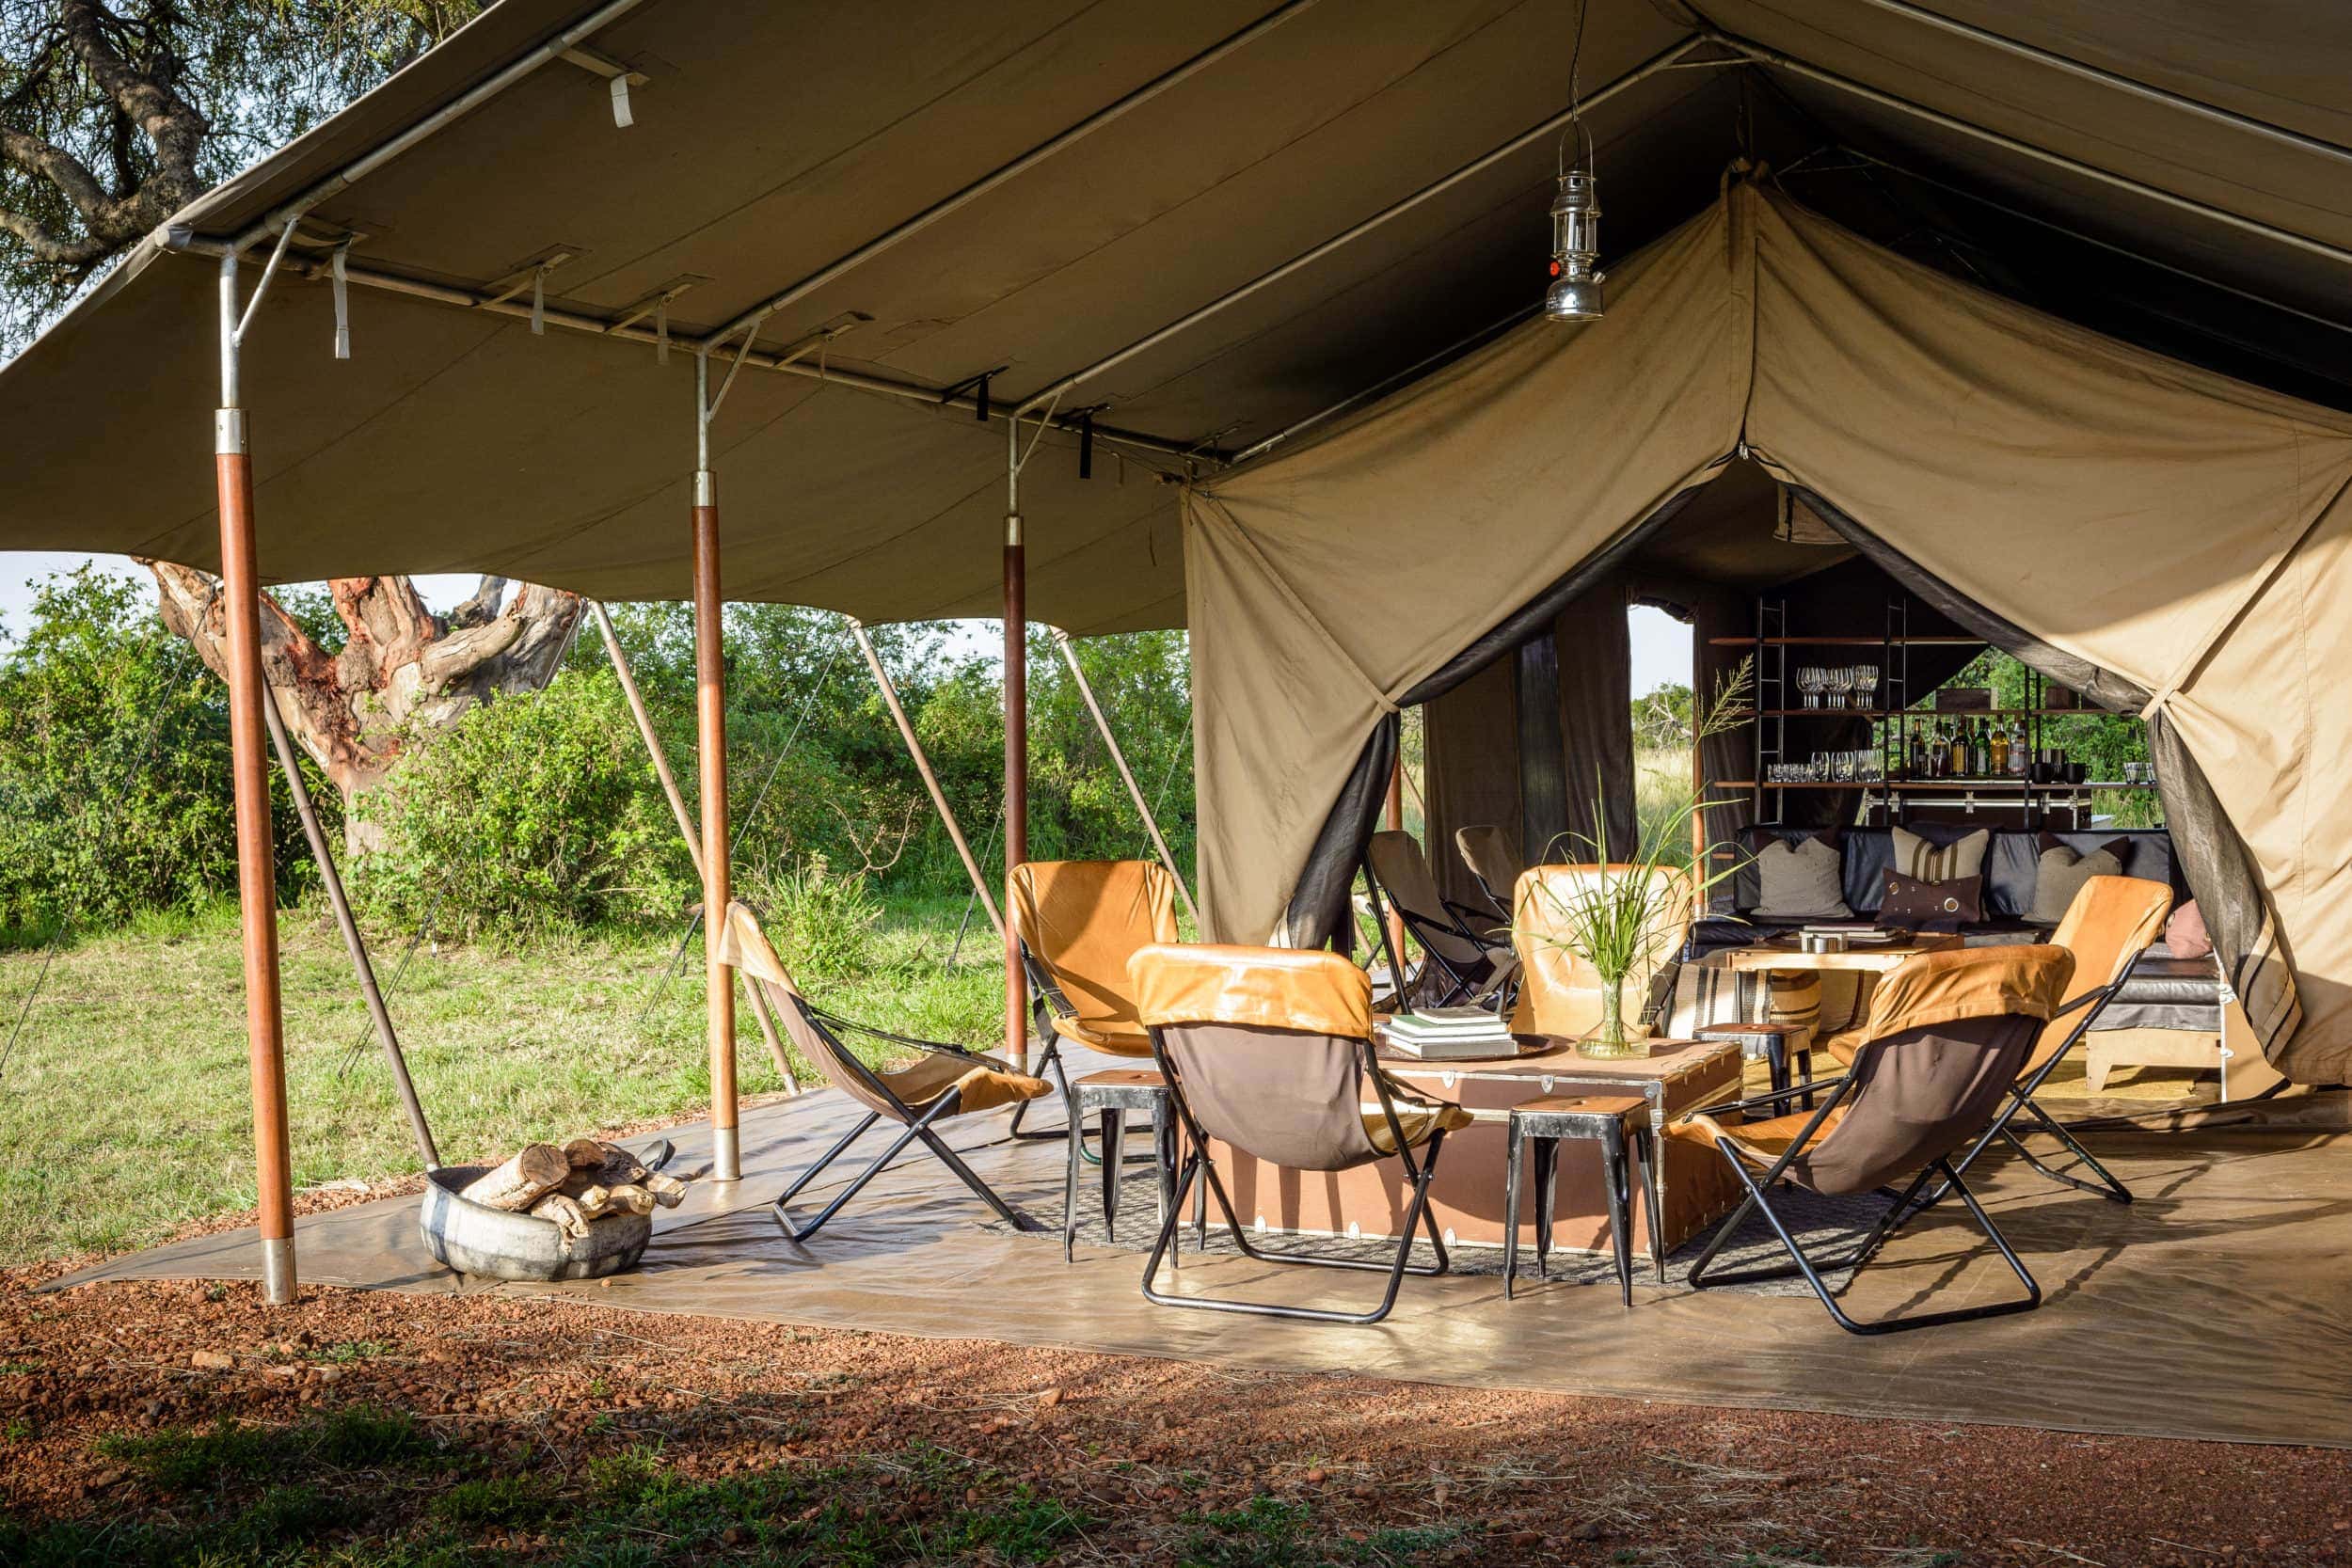 Camping explore. Сафари палатки глэмпинг. Глэмпинг сафари тент. Сафари тенты для кемпинга. Мегапалатка Safari Tent.